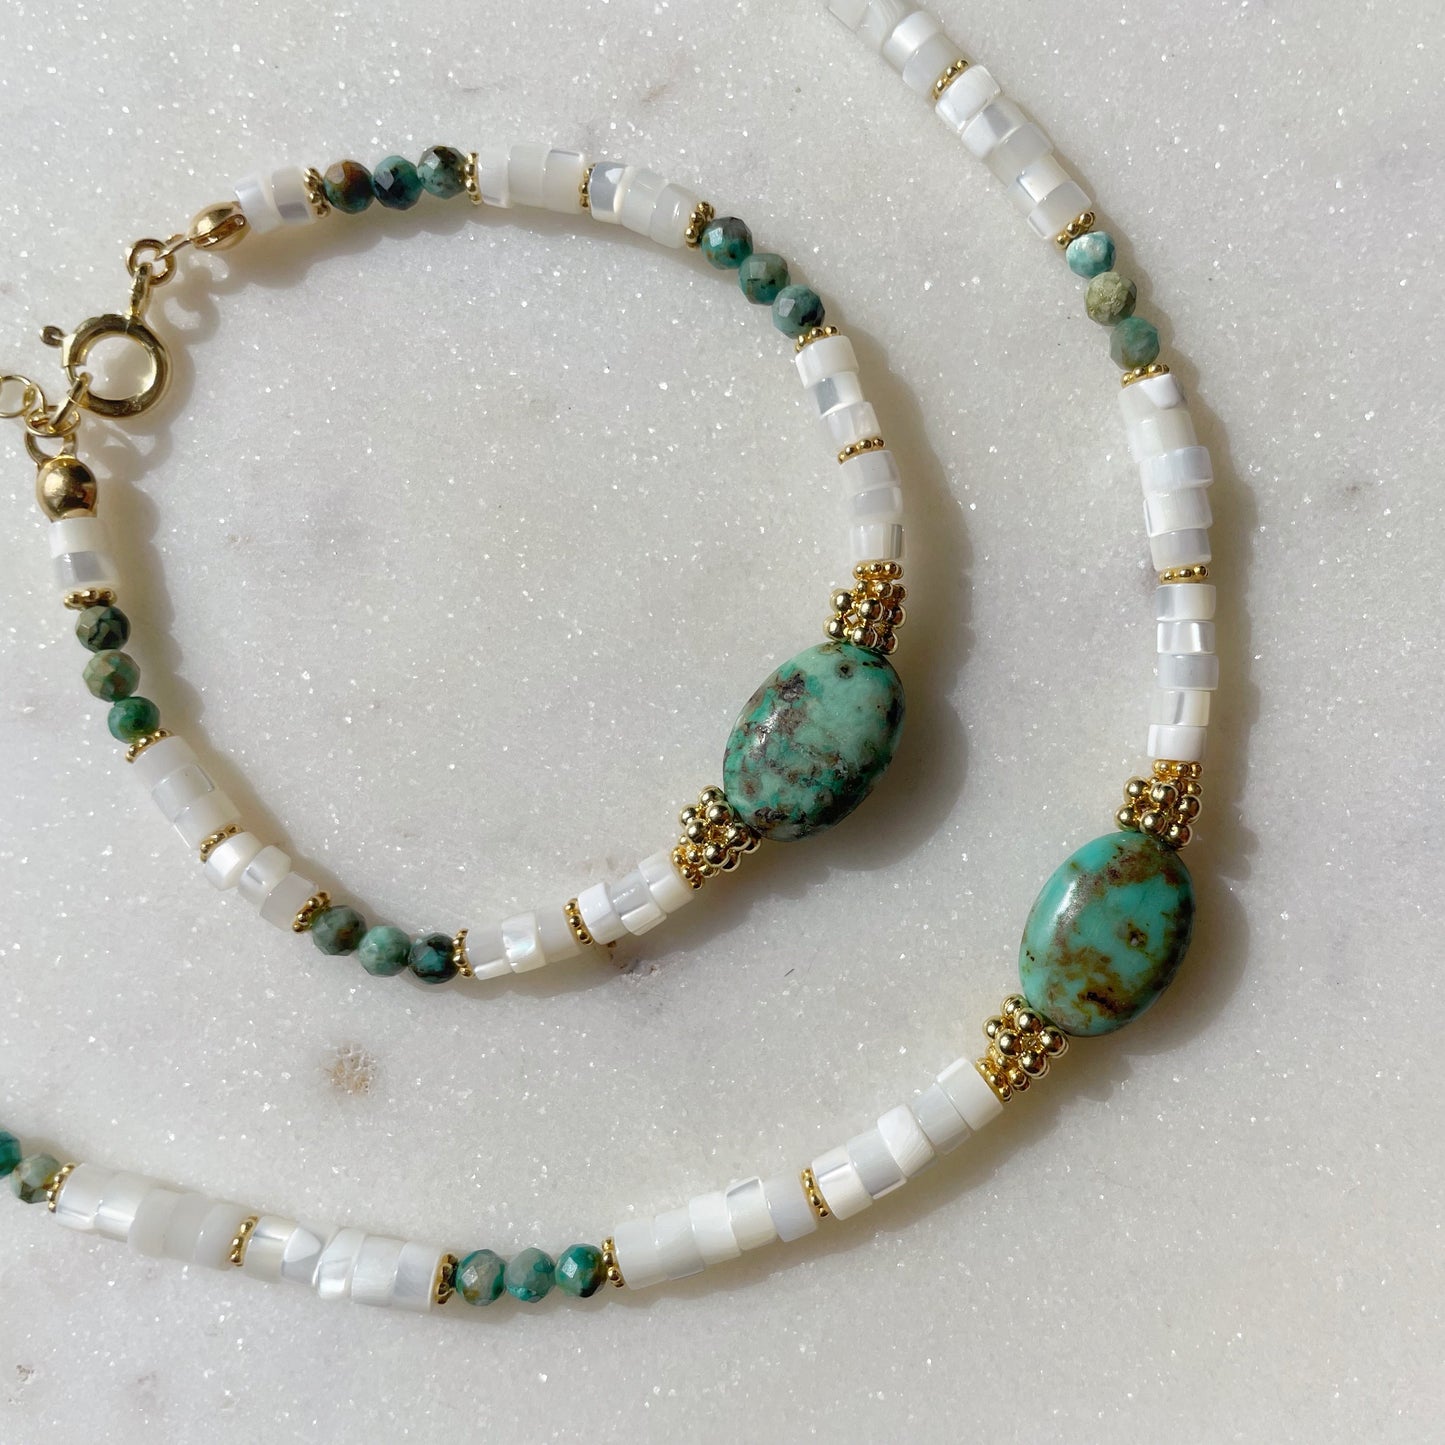 Ezili necklace & bracelet set